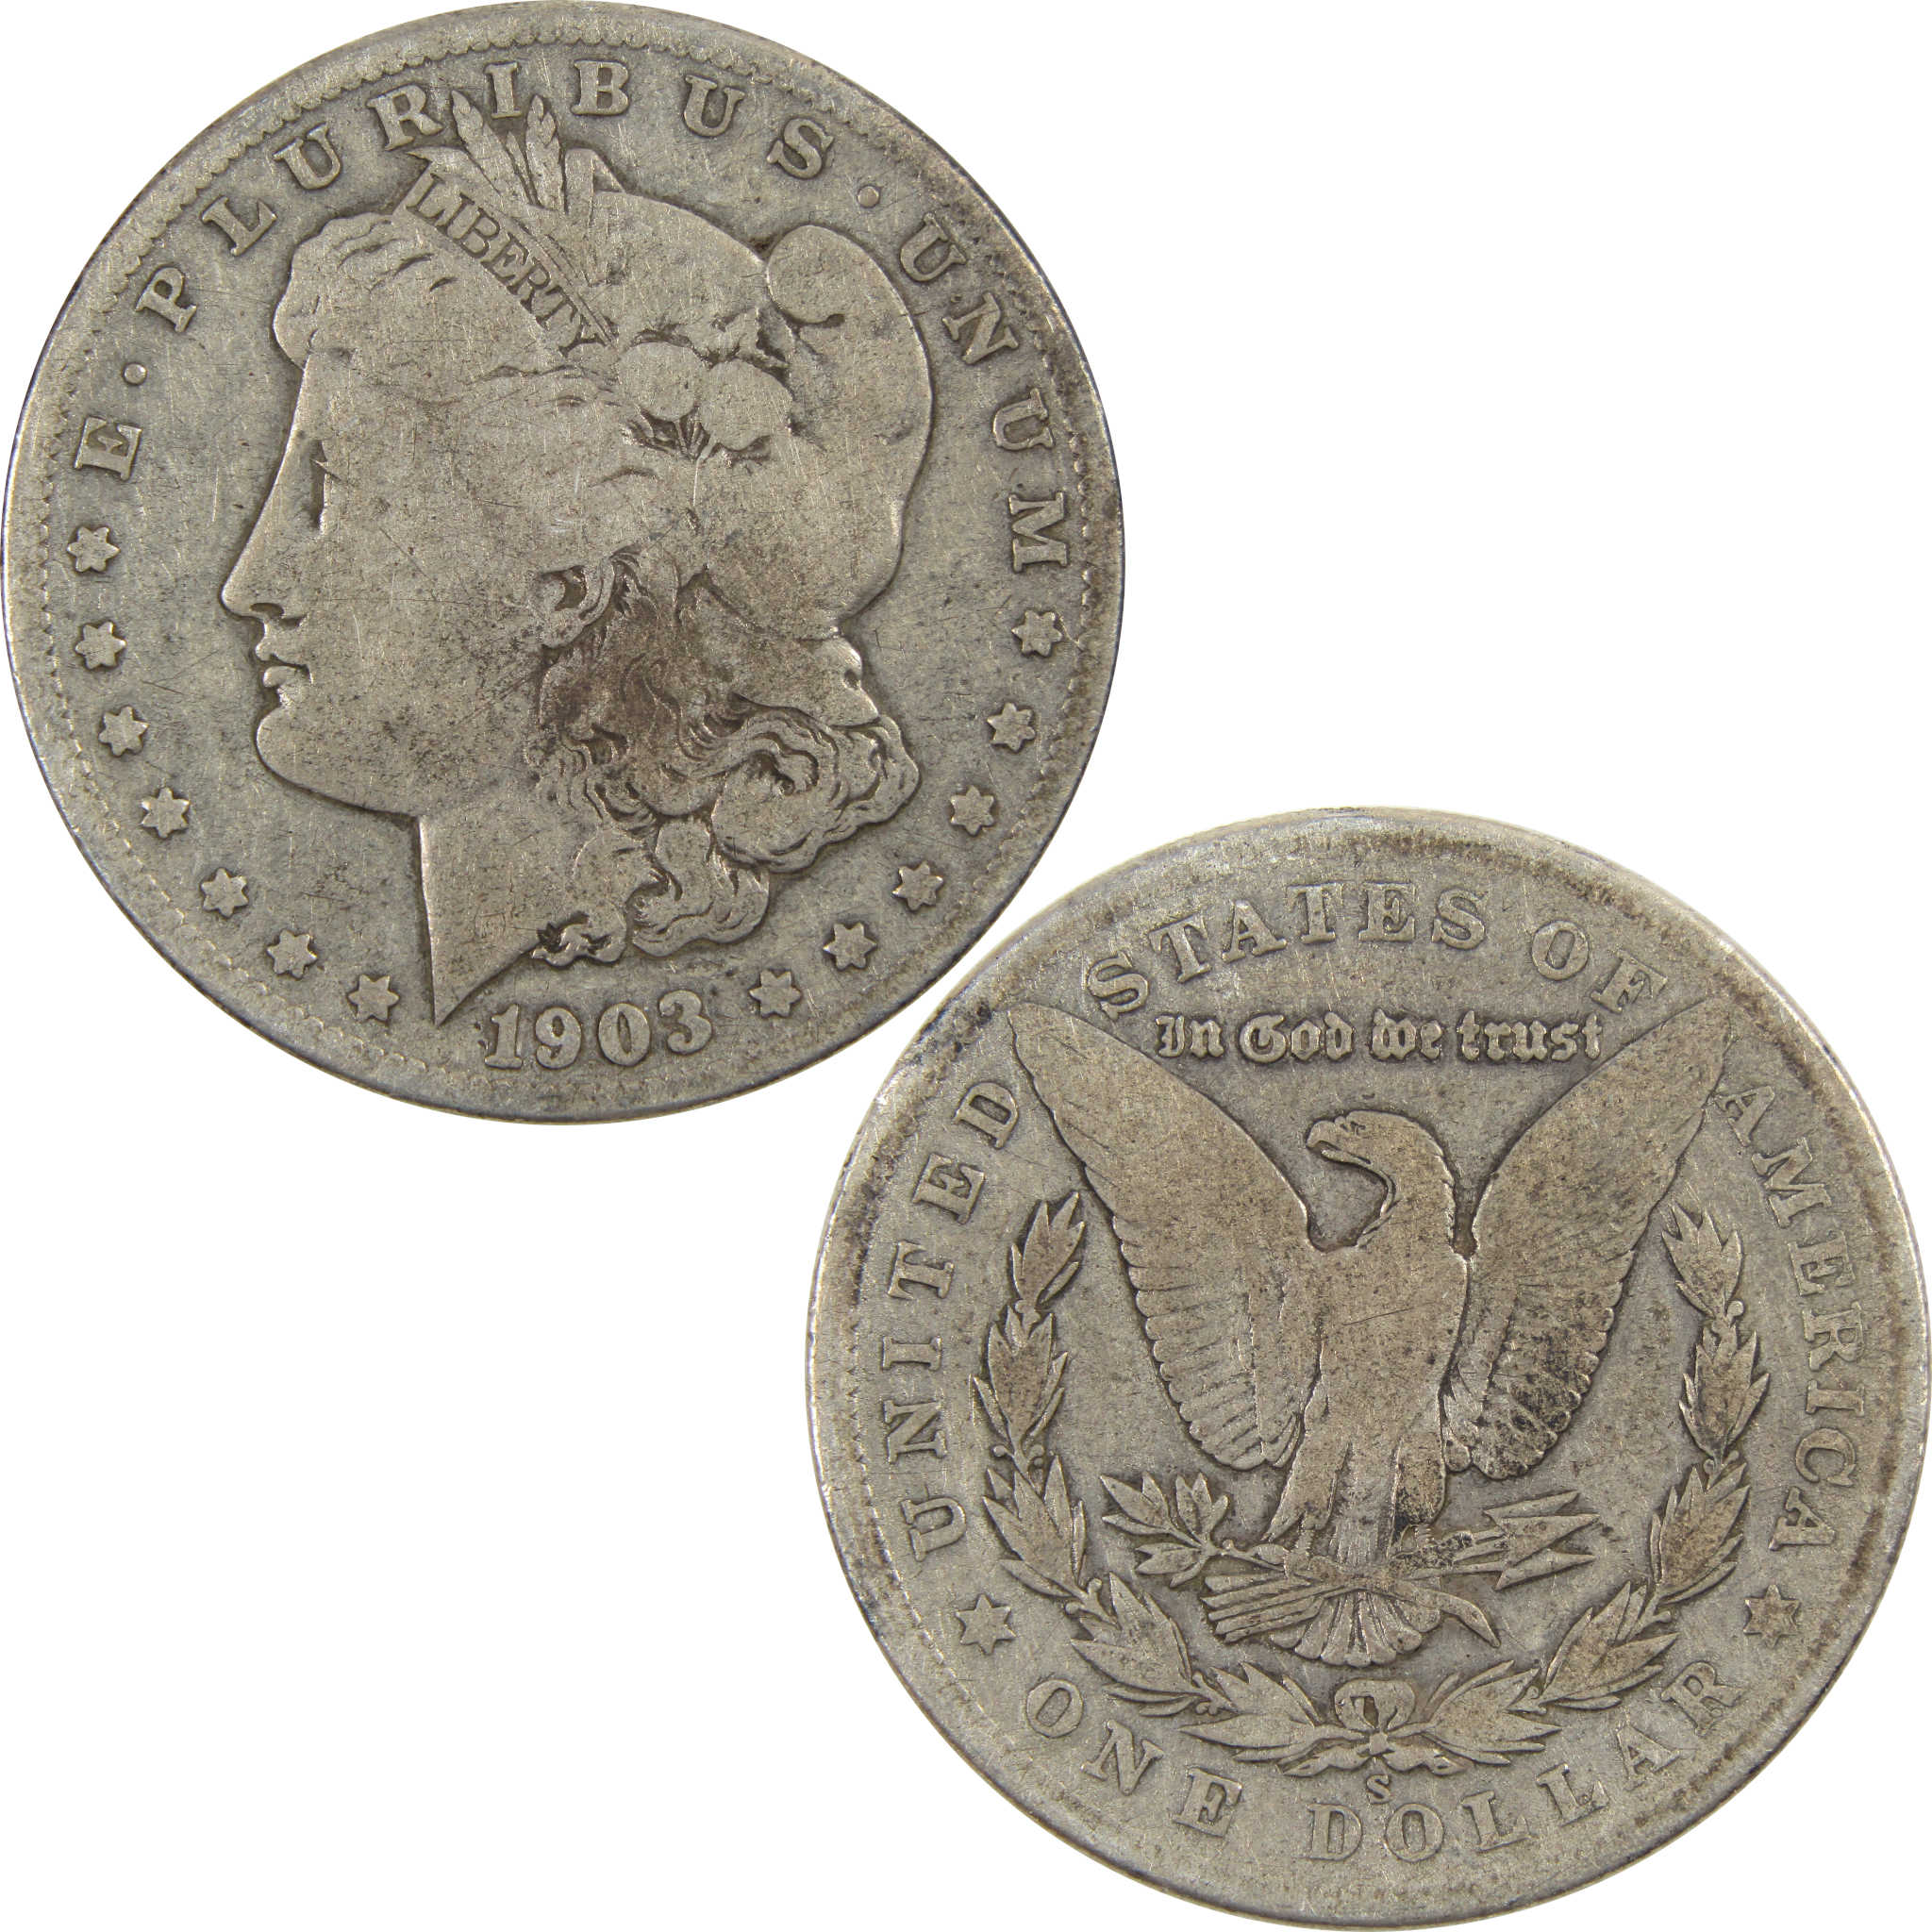 1903 S Morgan Dollar G Good 90% Silver $1 US Coin SKU:I3980 - Morgan coin - Morgan silver dollar - Morgan silver dollar for sale - Profile Coins &amp; Collectibles